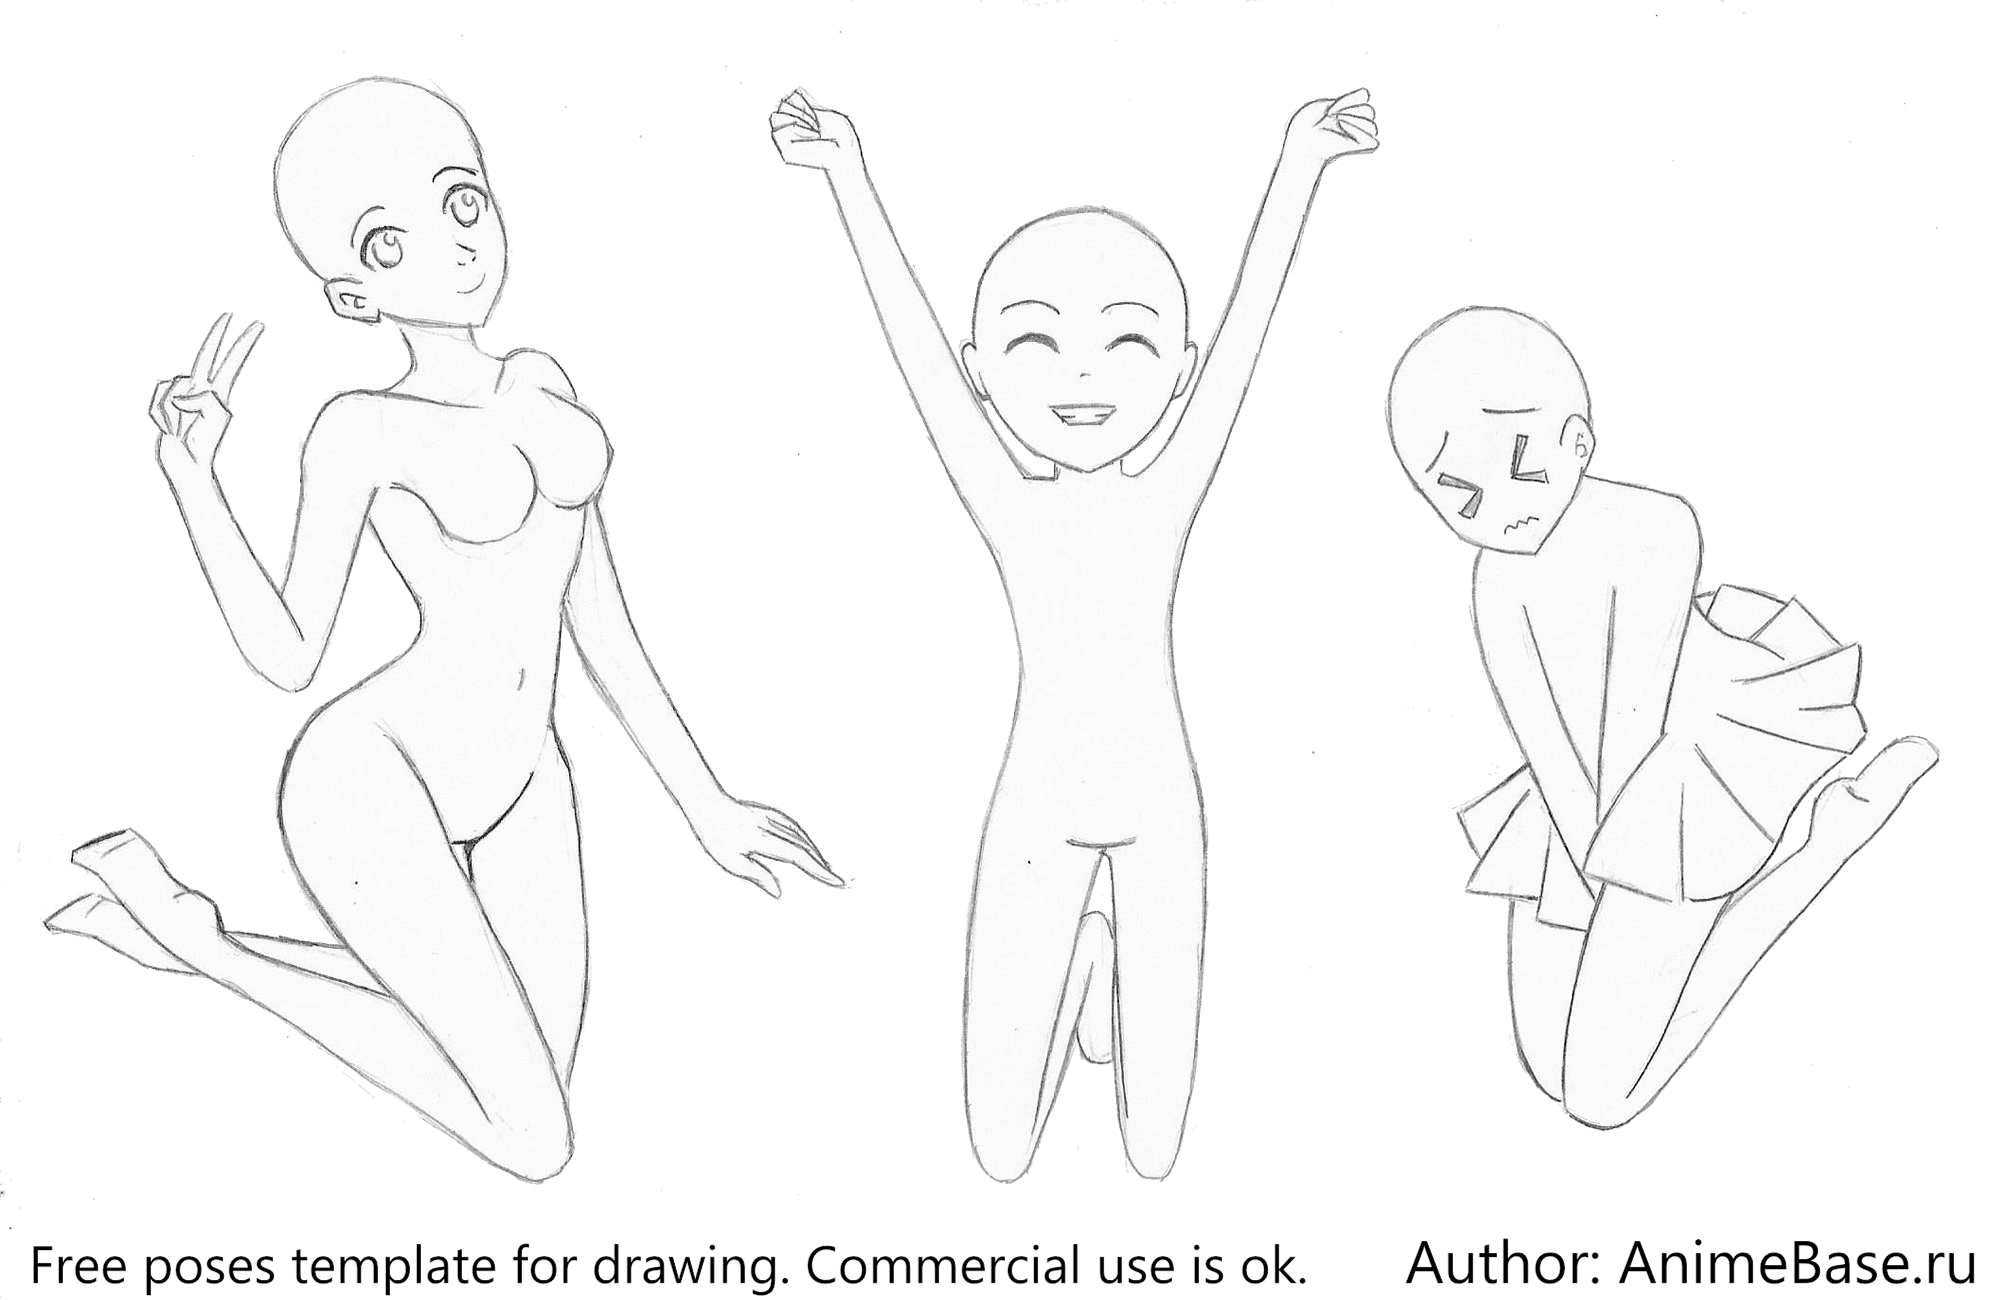 Anime pose templates